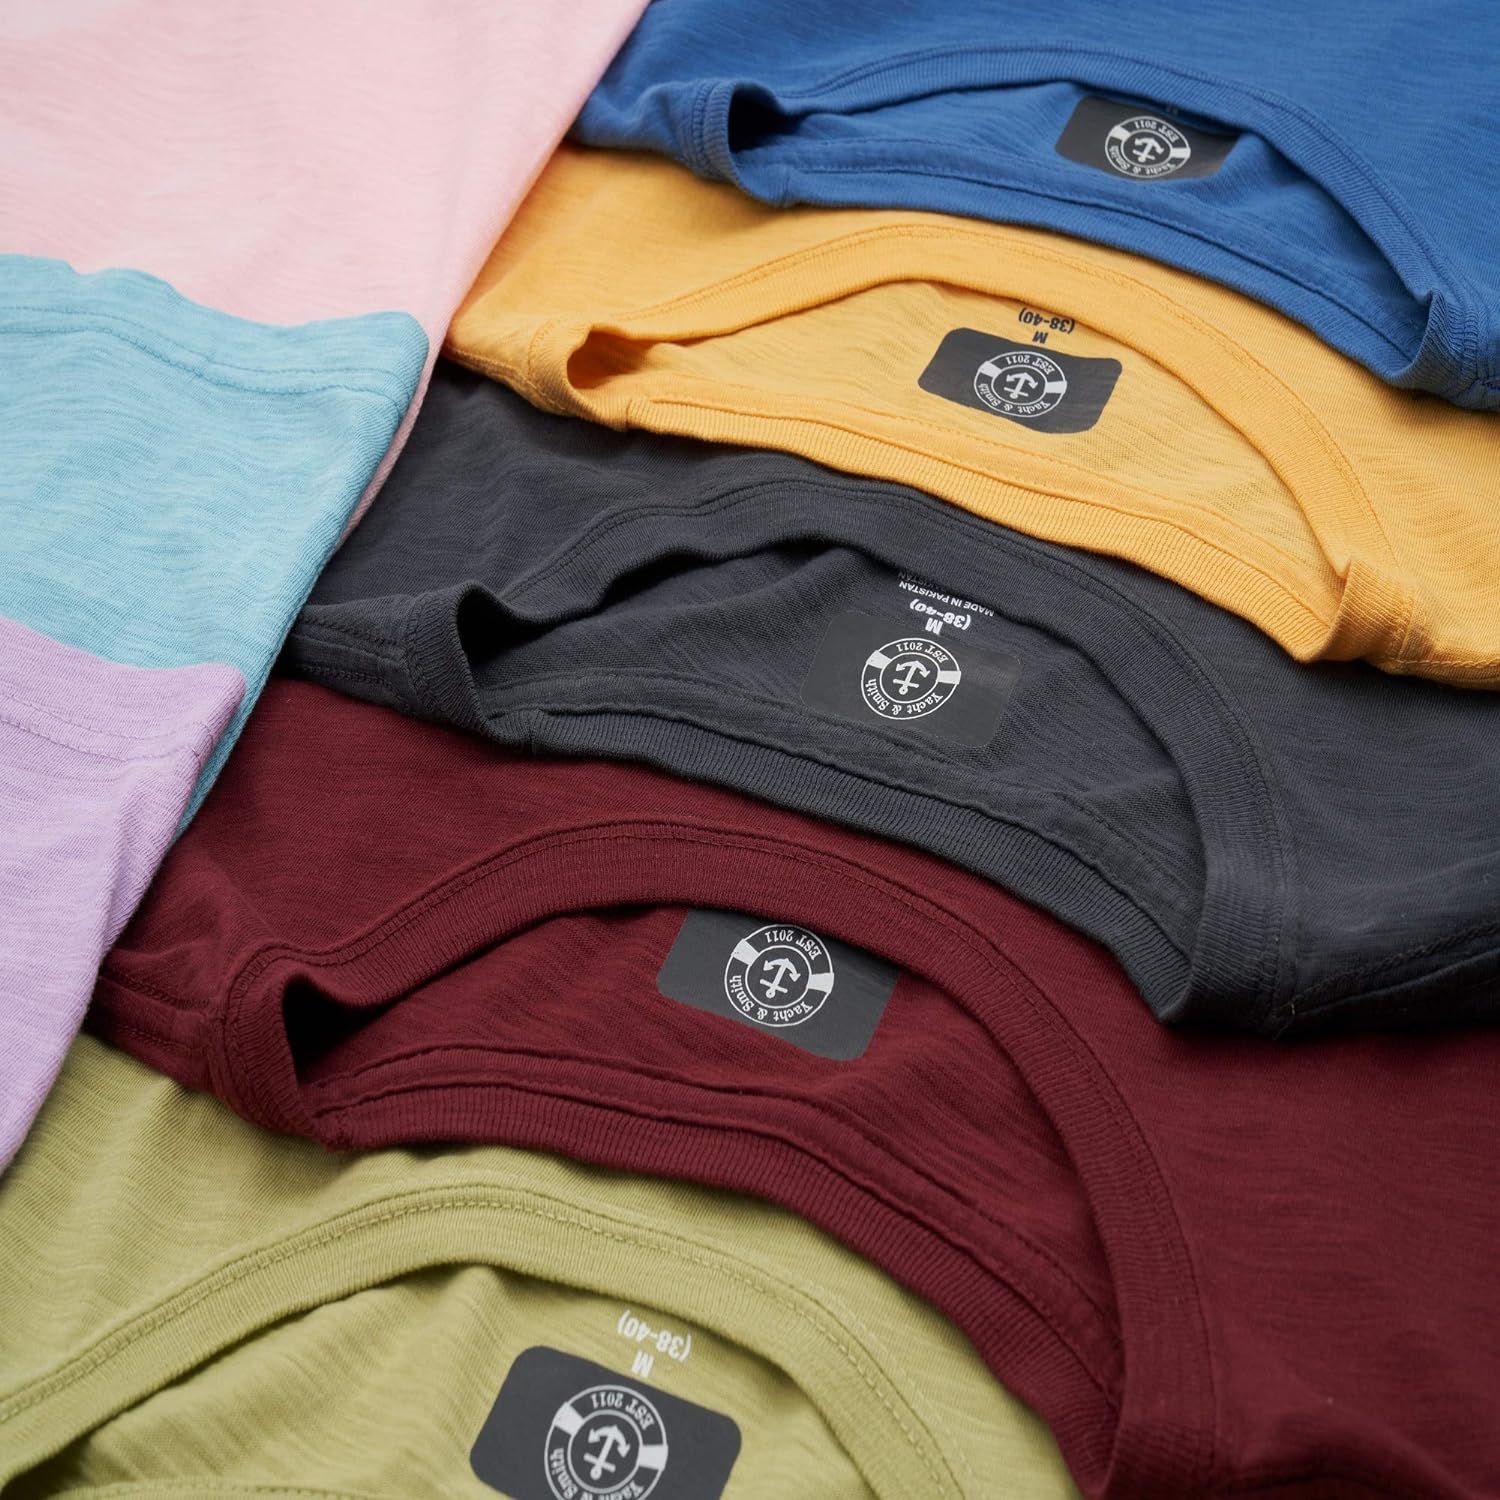 Yacht & Smith 9 Pack of Mens Cotton Slub Pocket Tees Tshirt, T-shirts in bulk Wholesale, Colorful Packs (3XL)